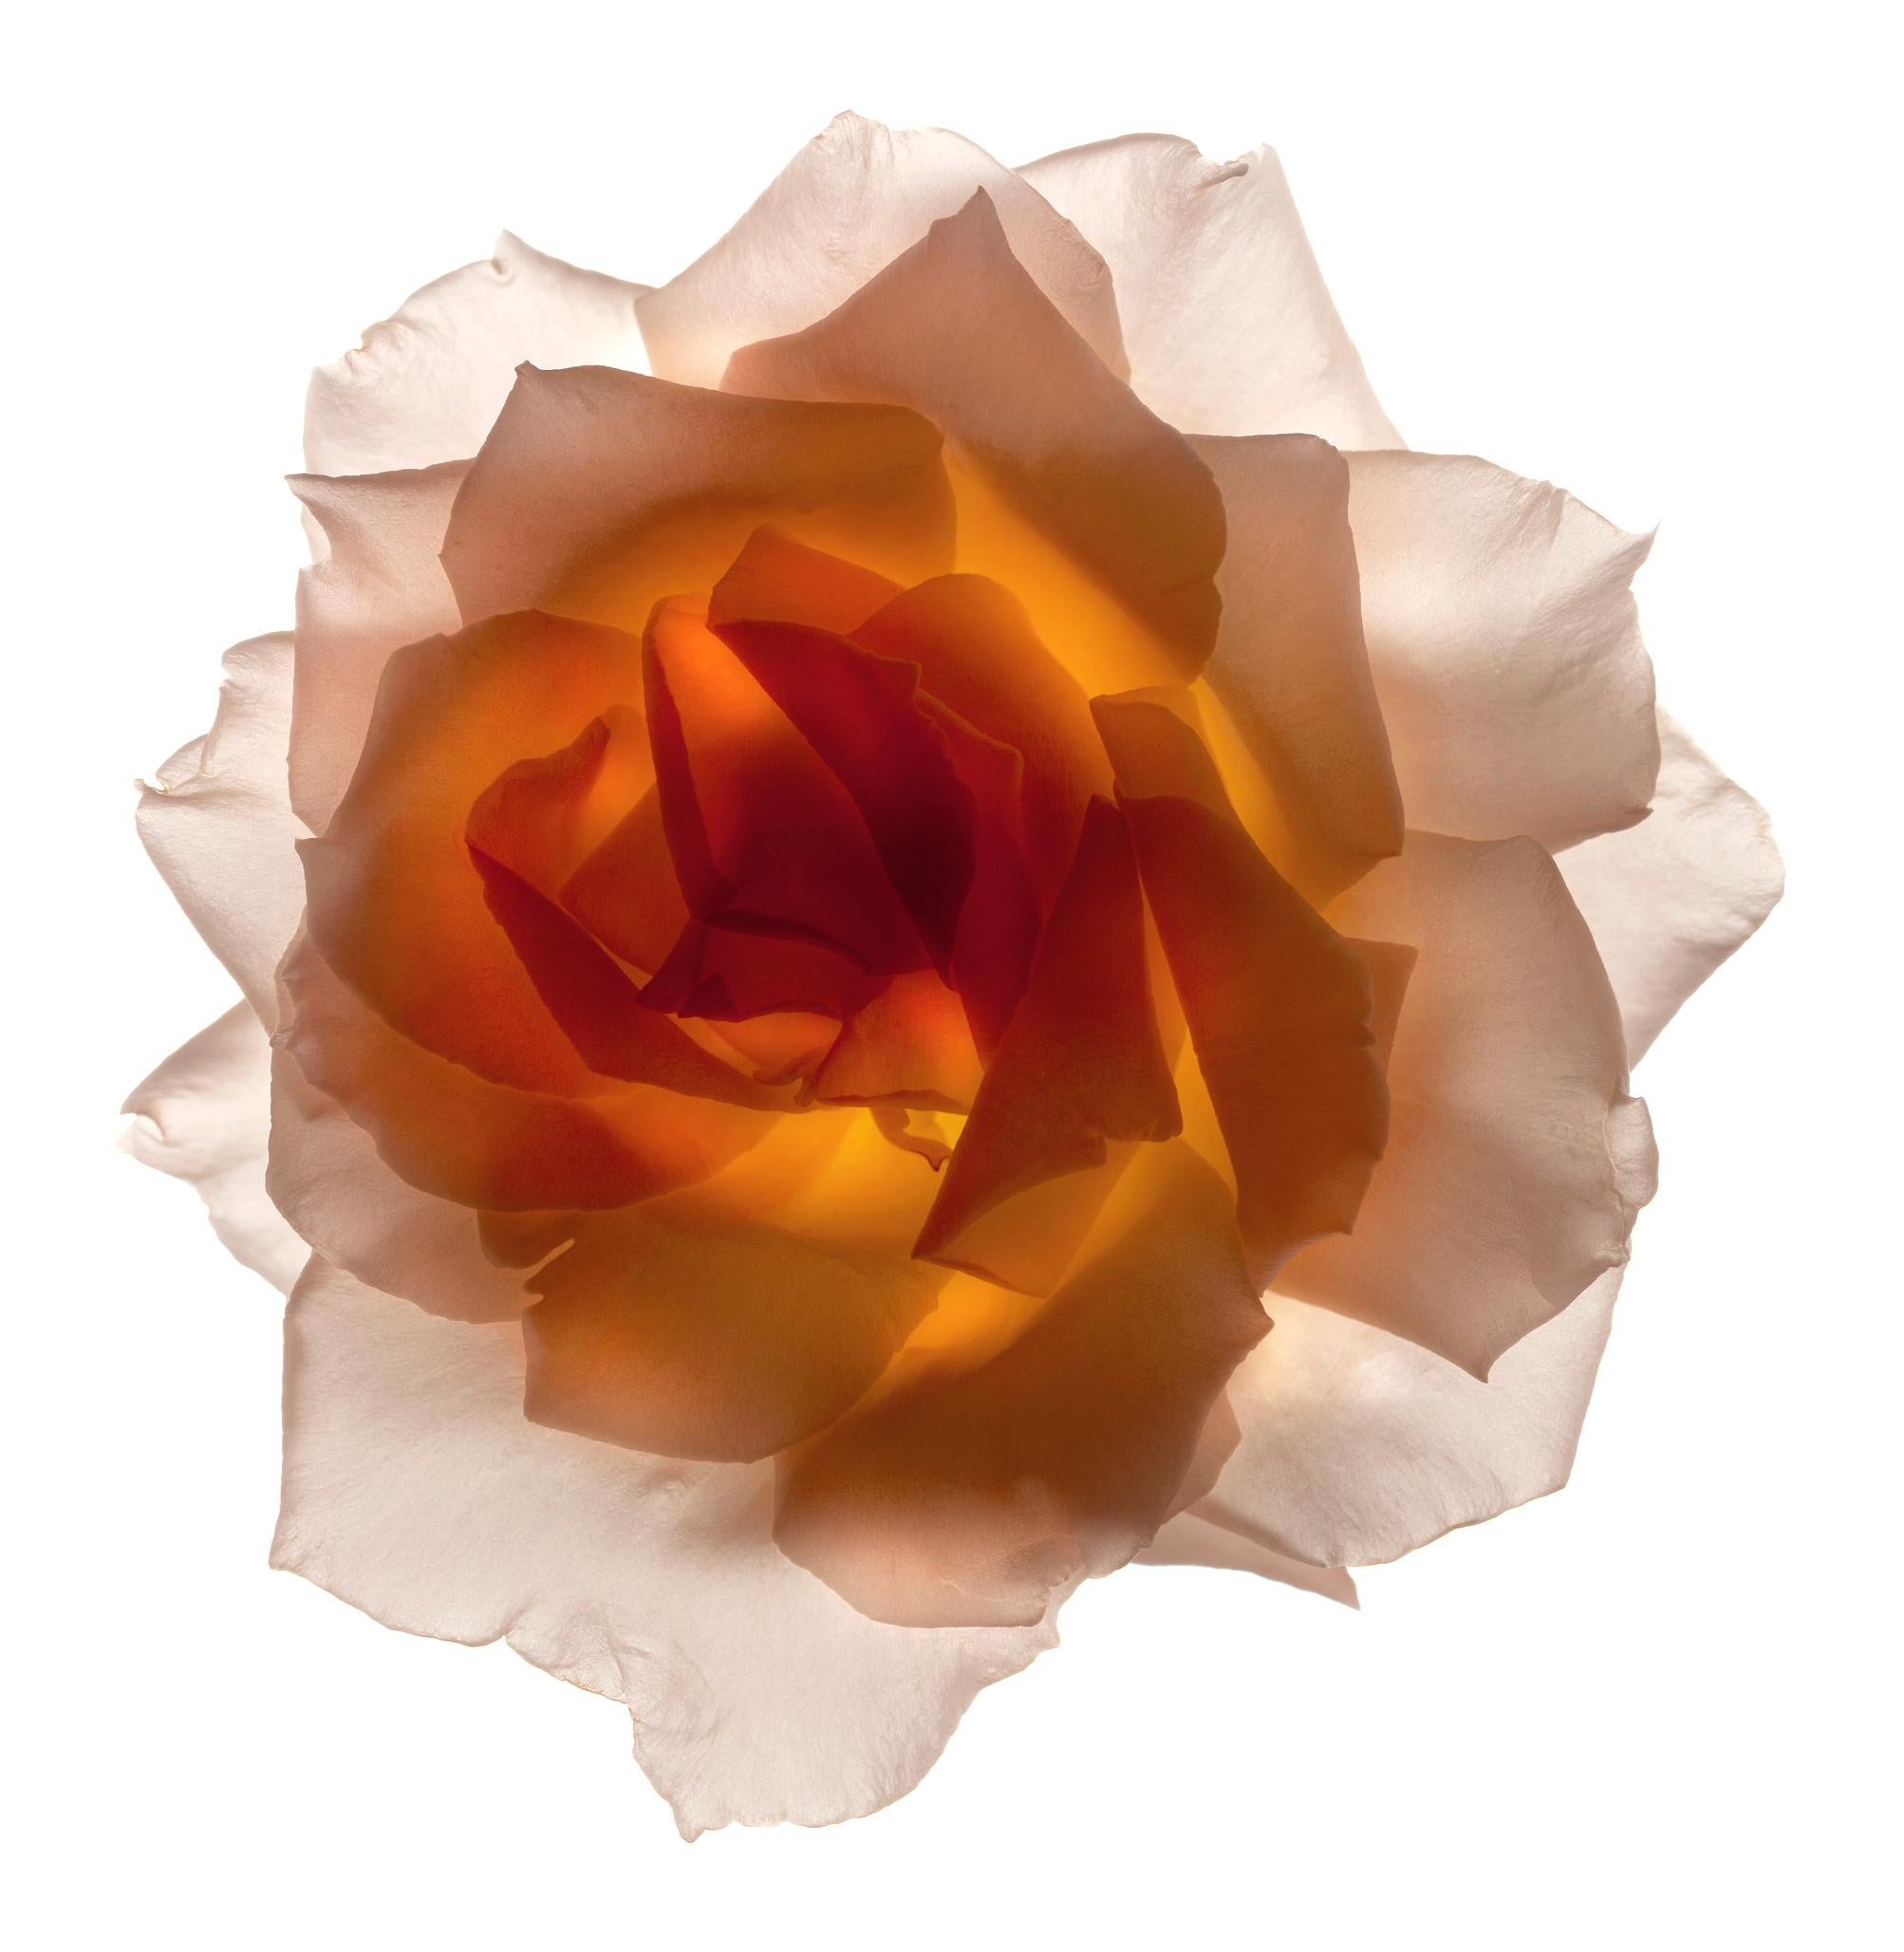 Chad Kleitsch Still-Life Photograph - No. 21 (Framed Still Life Photograph of a Pastel Orange Rose Flower on White) 